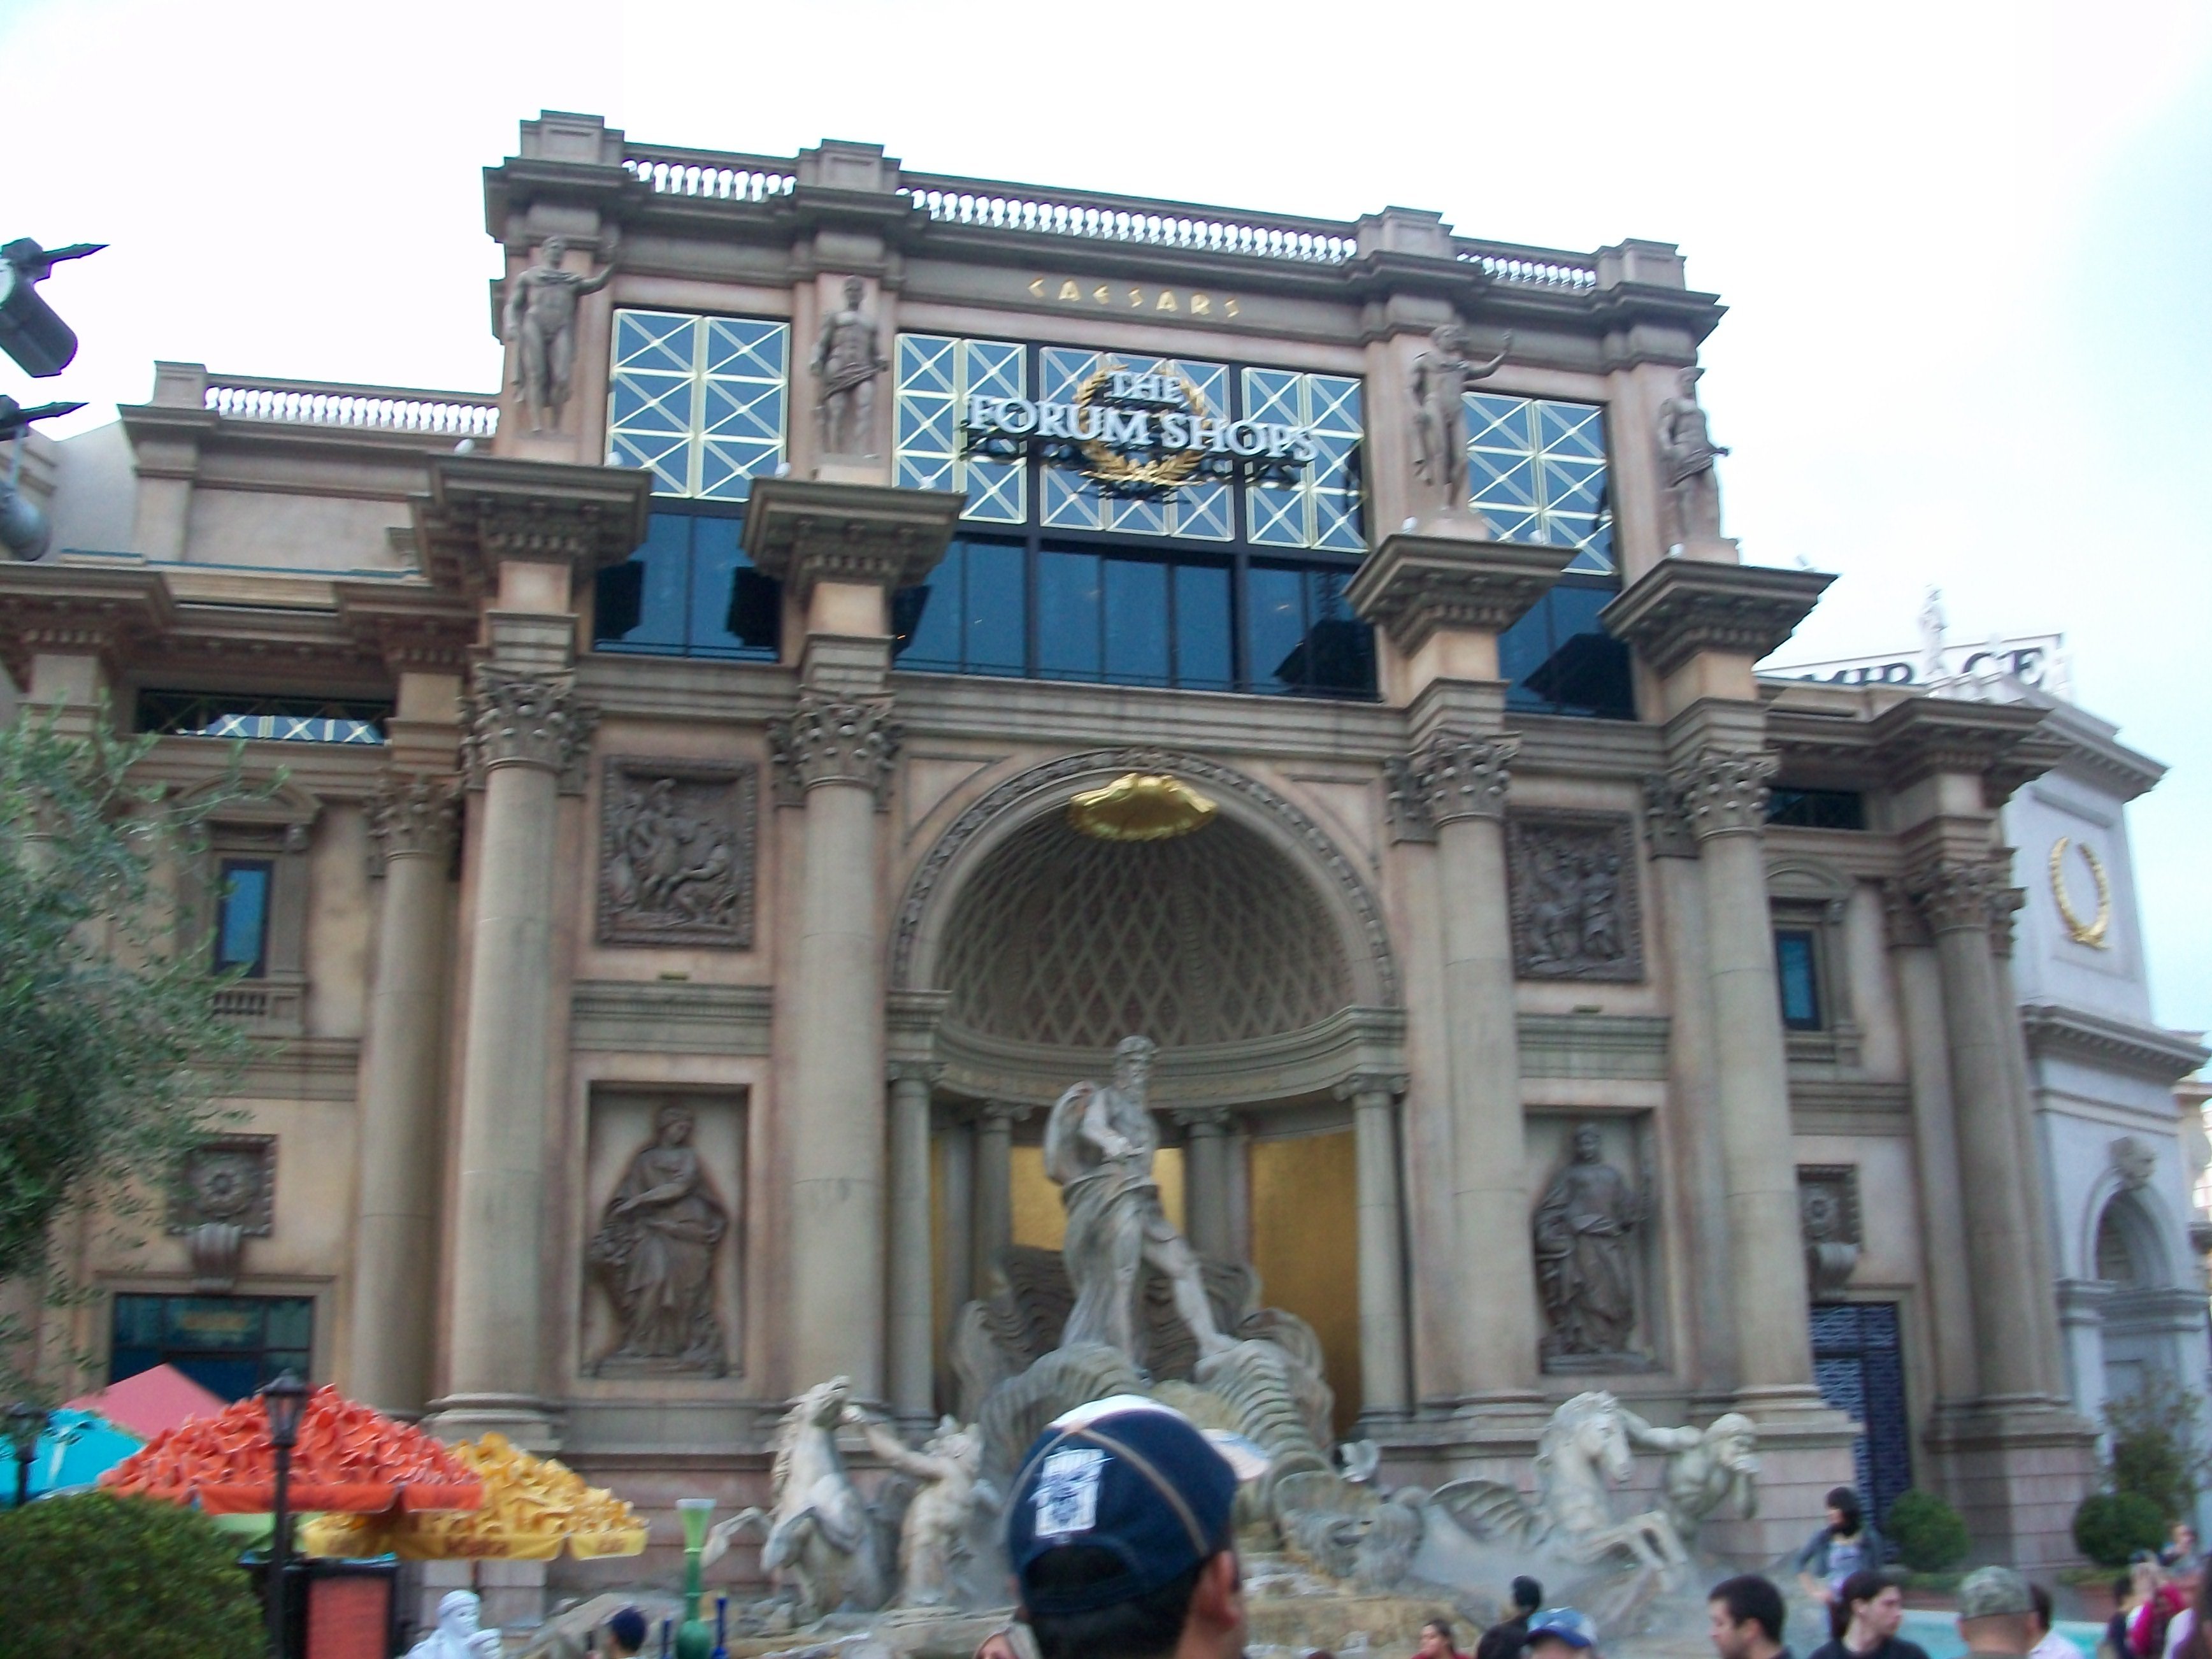 entrance to the forum shops at caesars palace las vegas boulevard